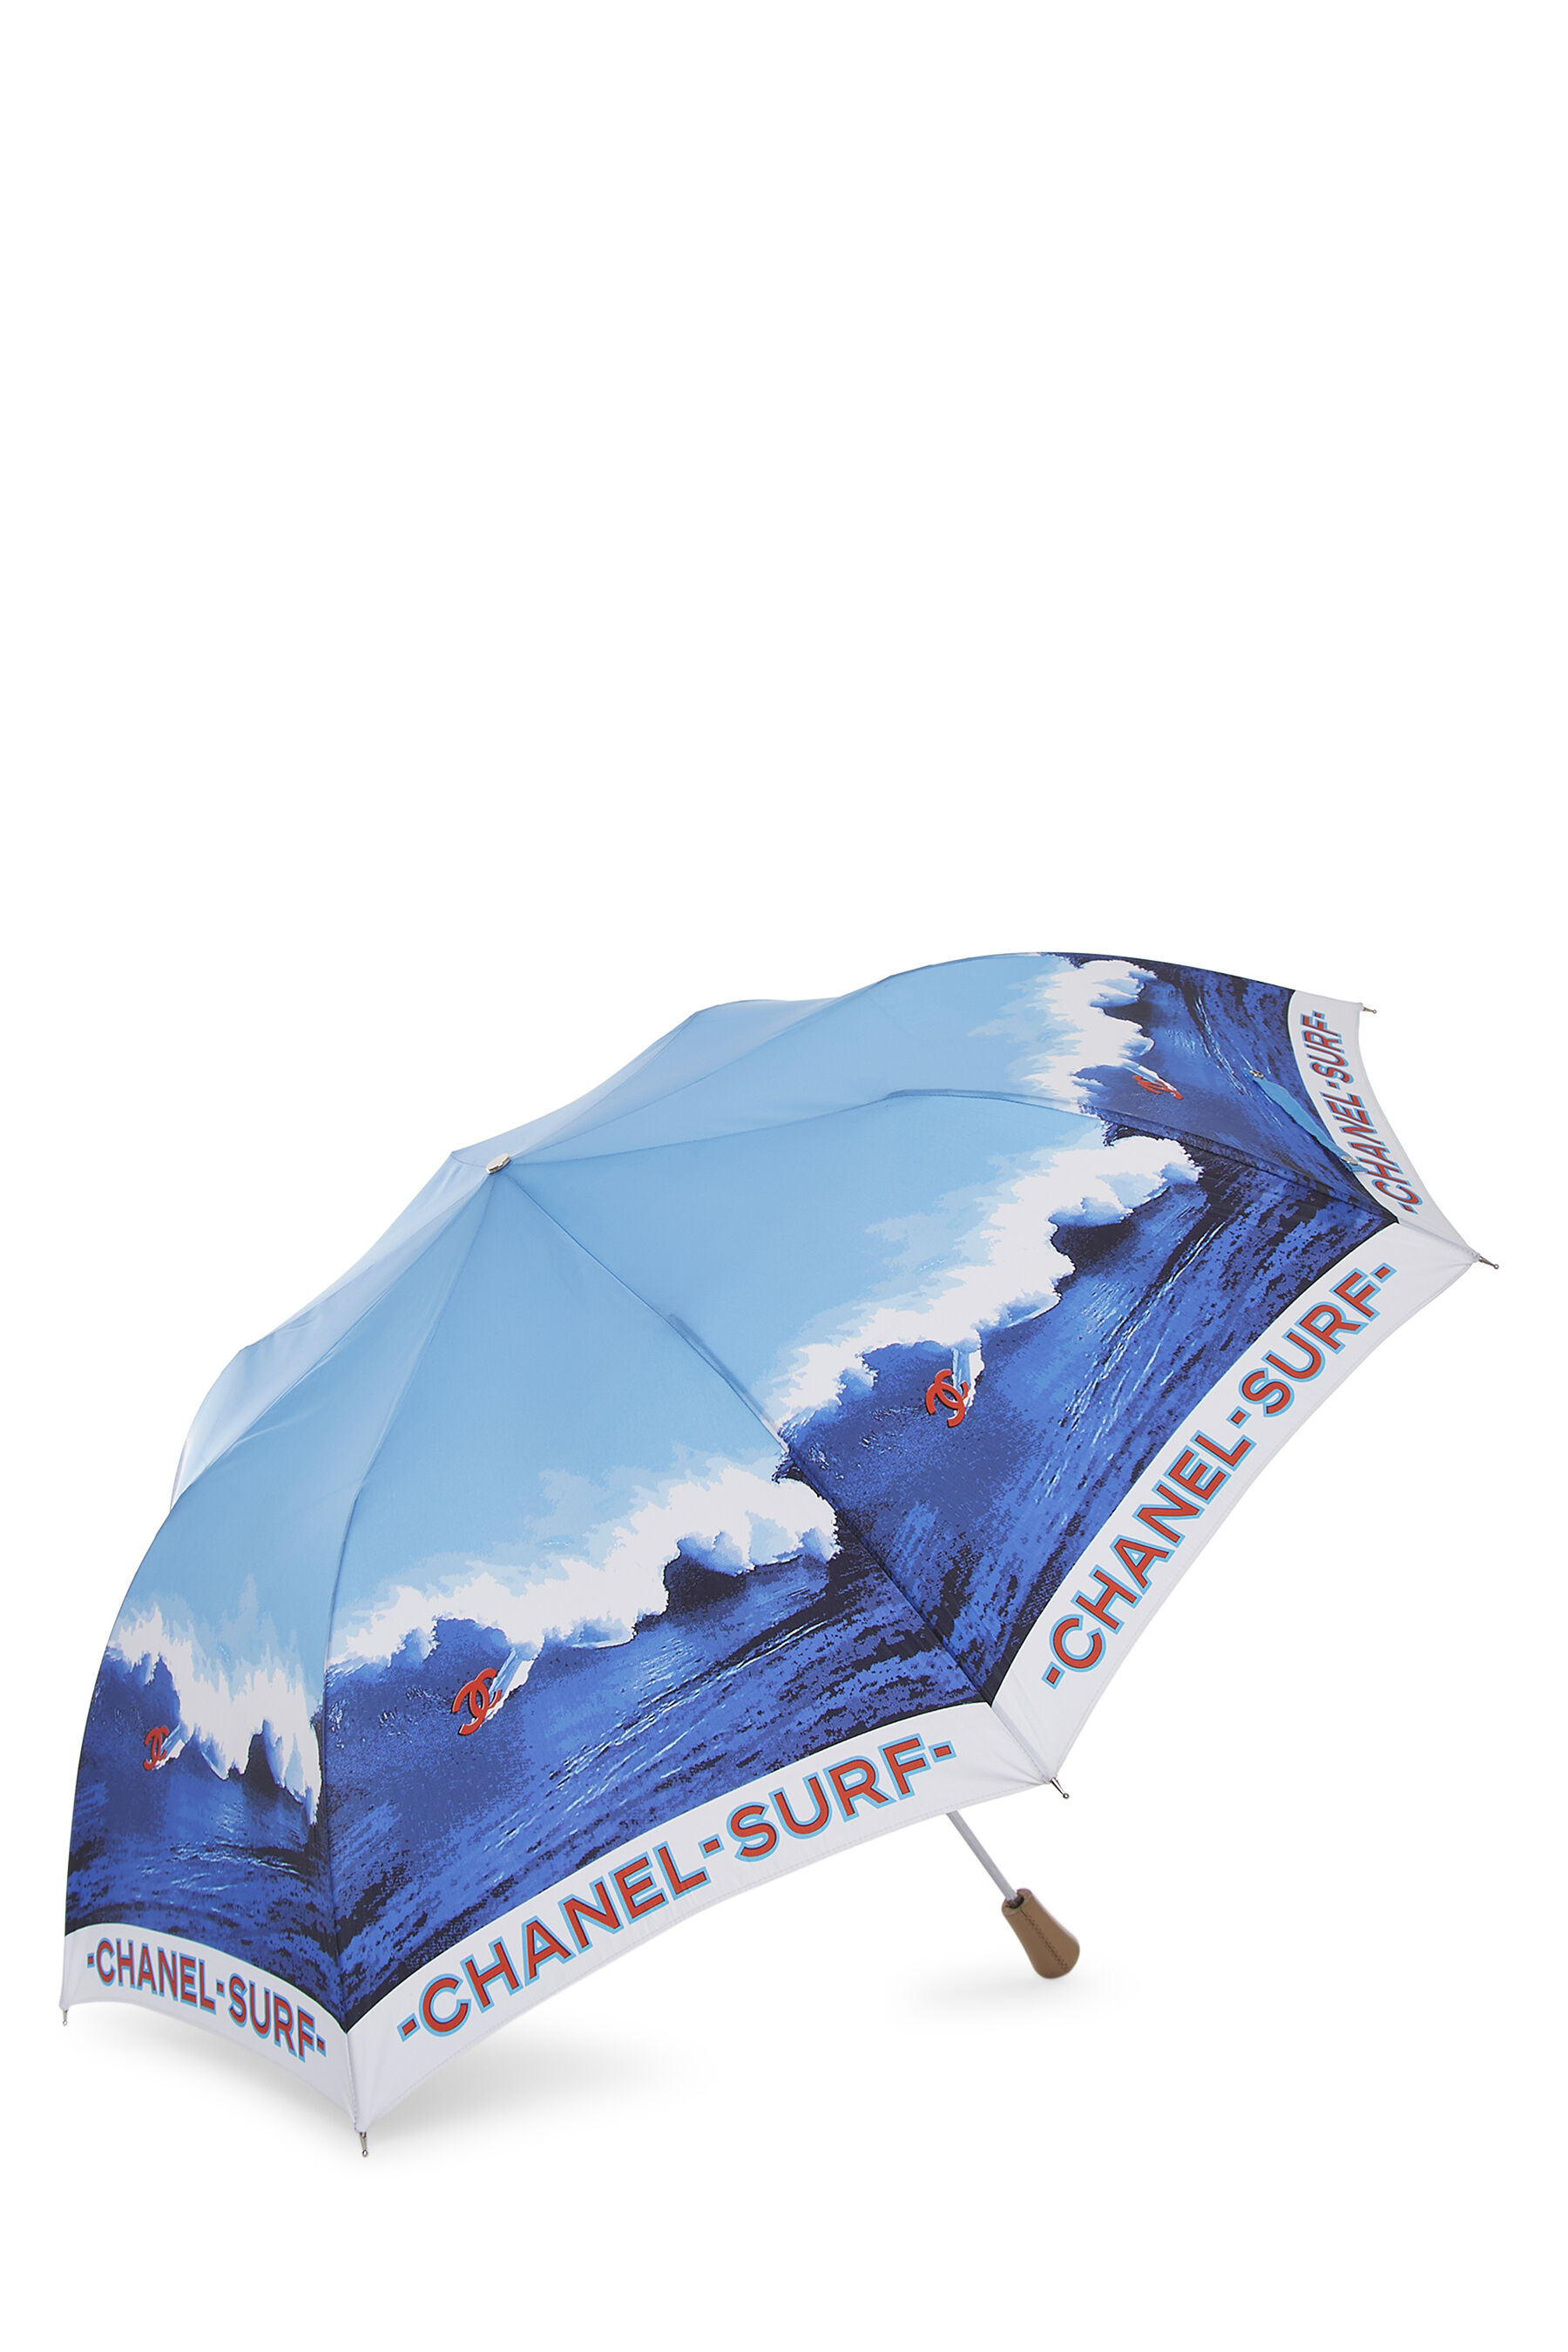 Chanel - Blue Surf Line Umbrella